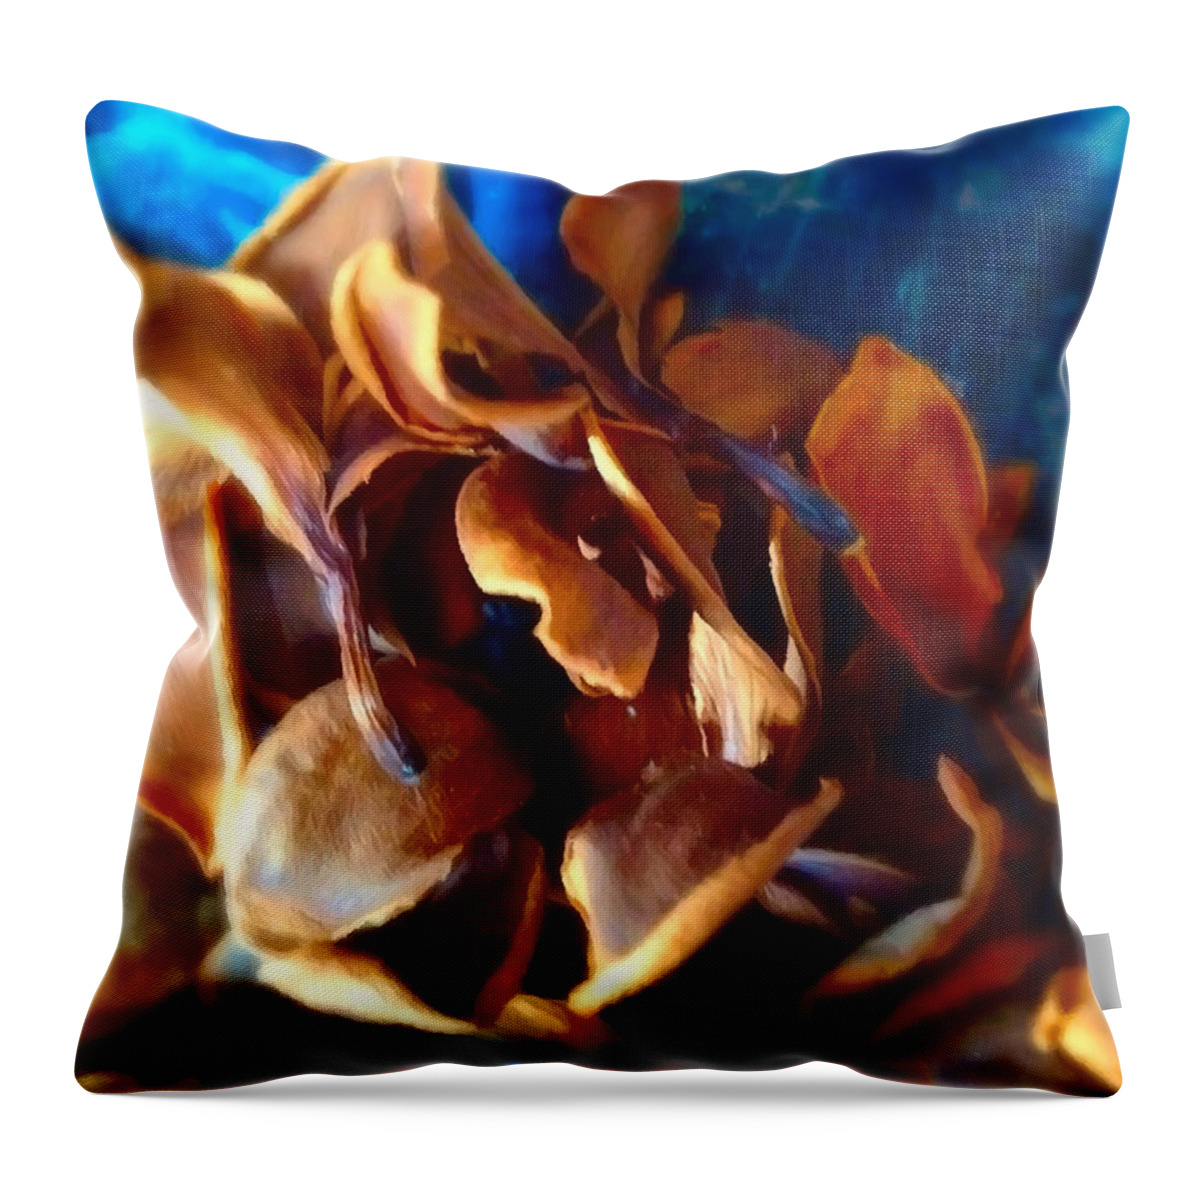 Frangipani Throw Pillow featuring the digital art Frangipani Blue Still Life by Vanessa Ilott